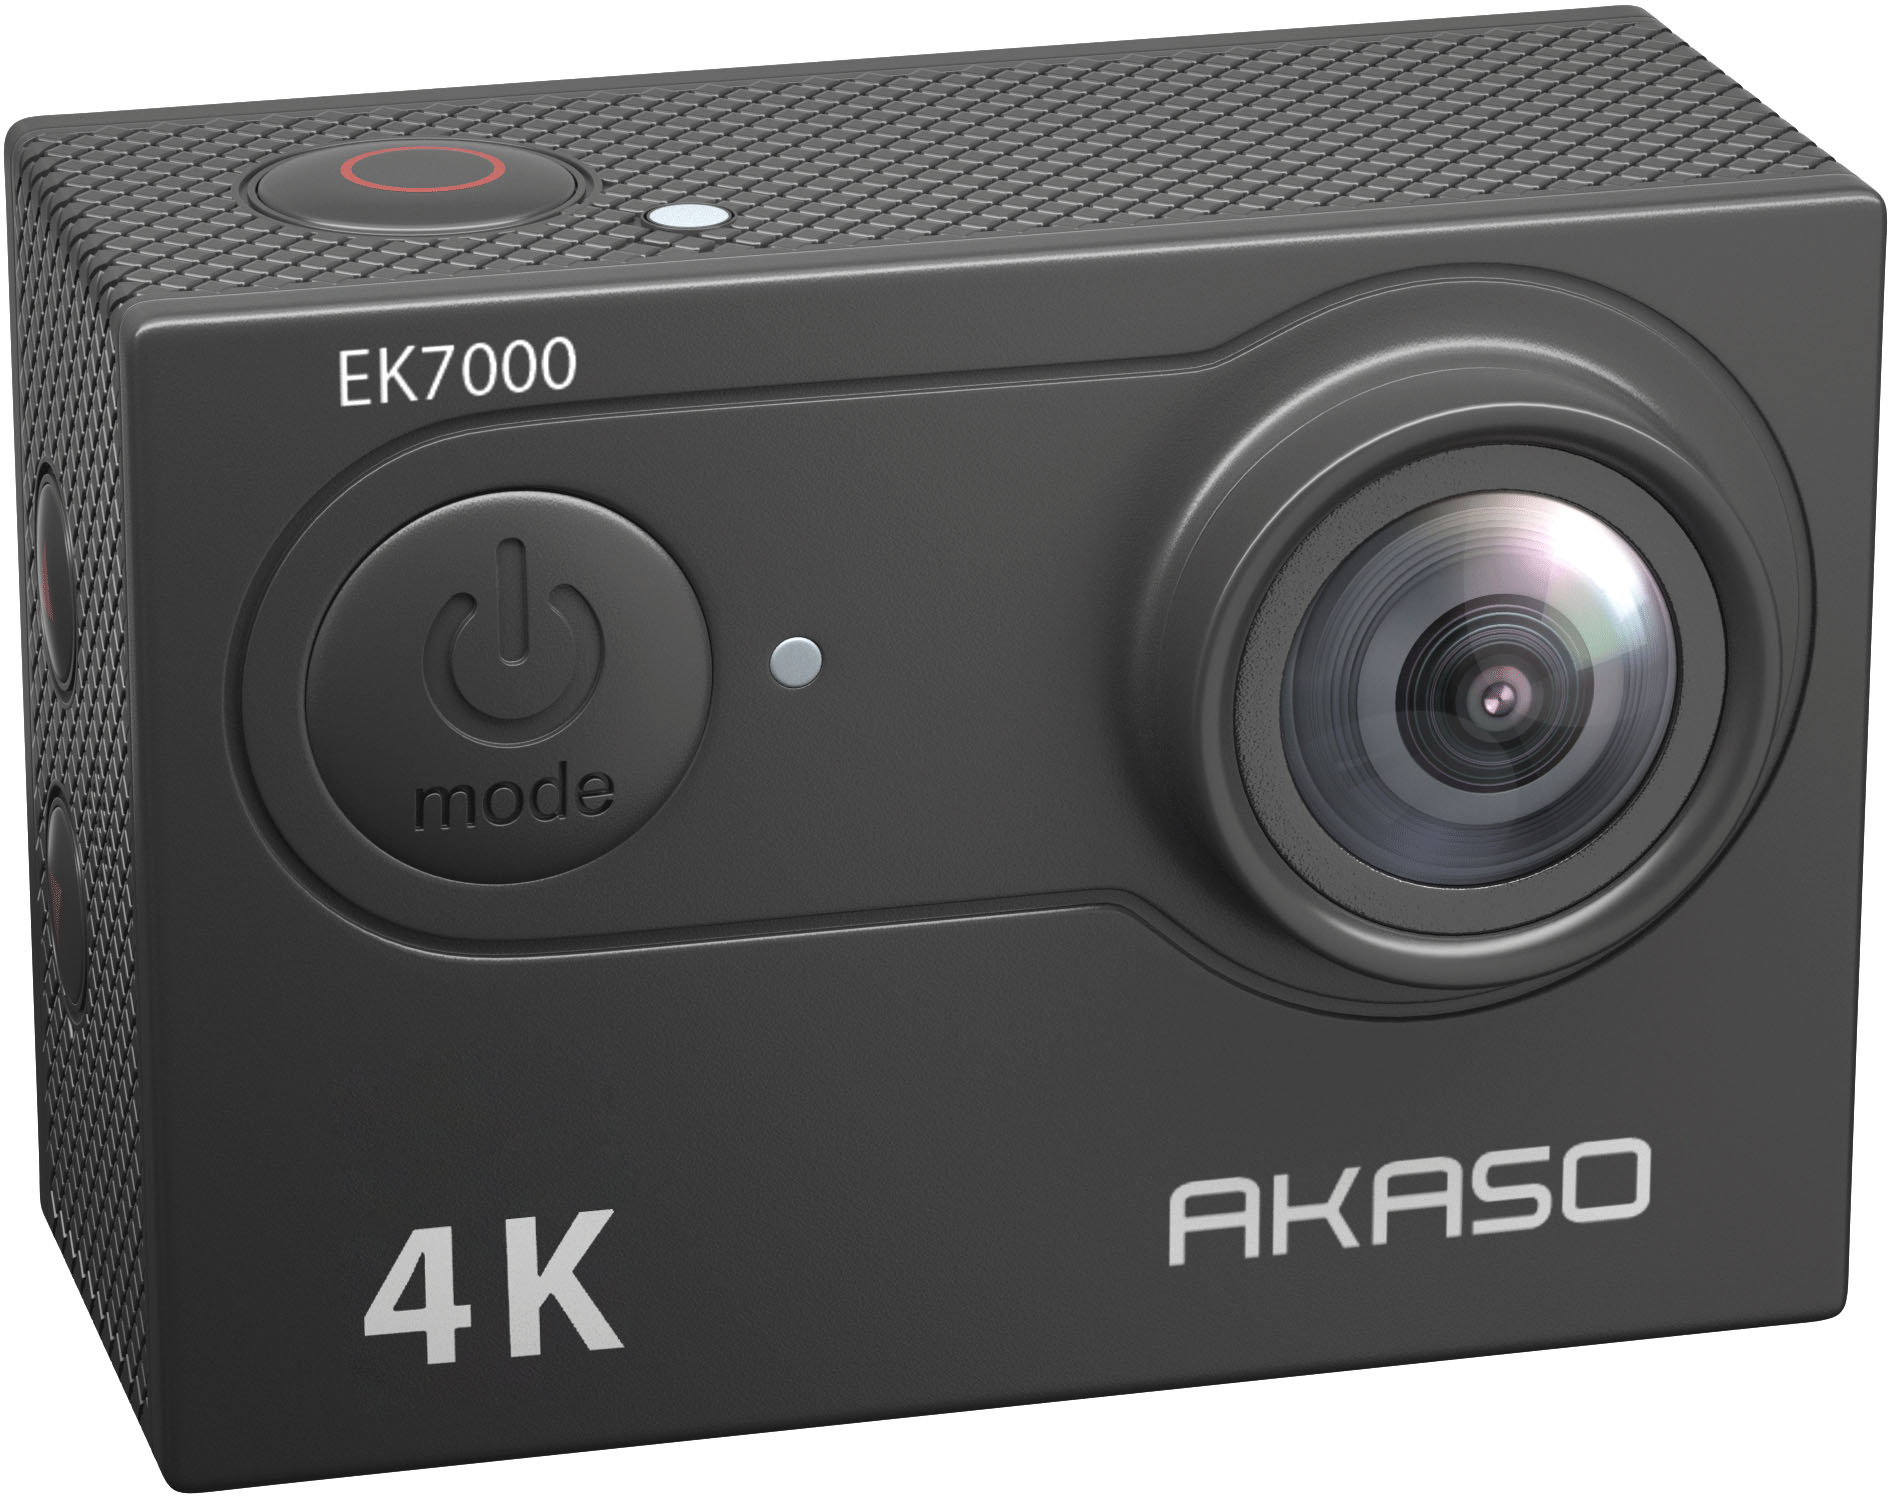 Akaso EK7000 Review - Full Review and Benchmarks